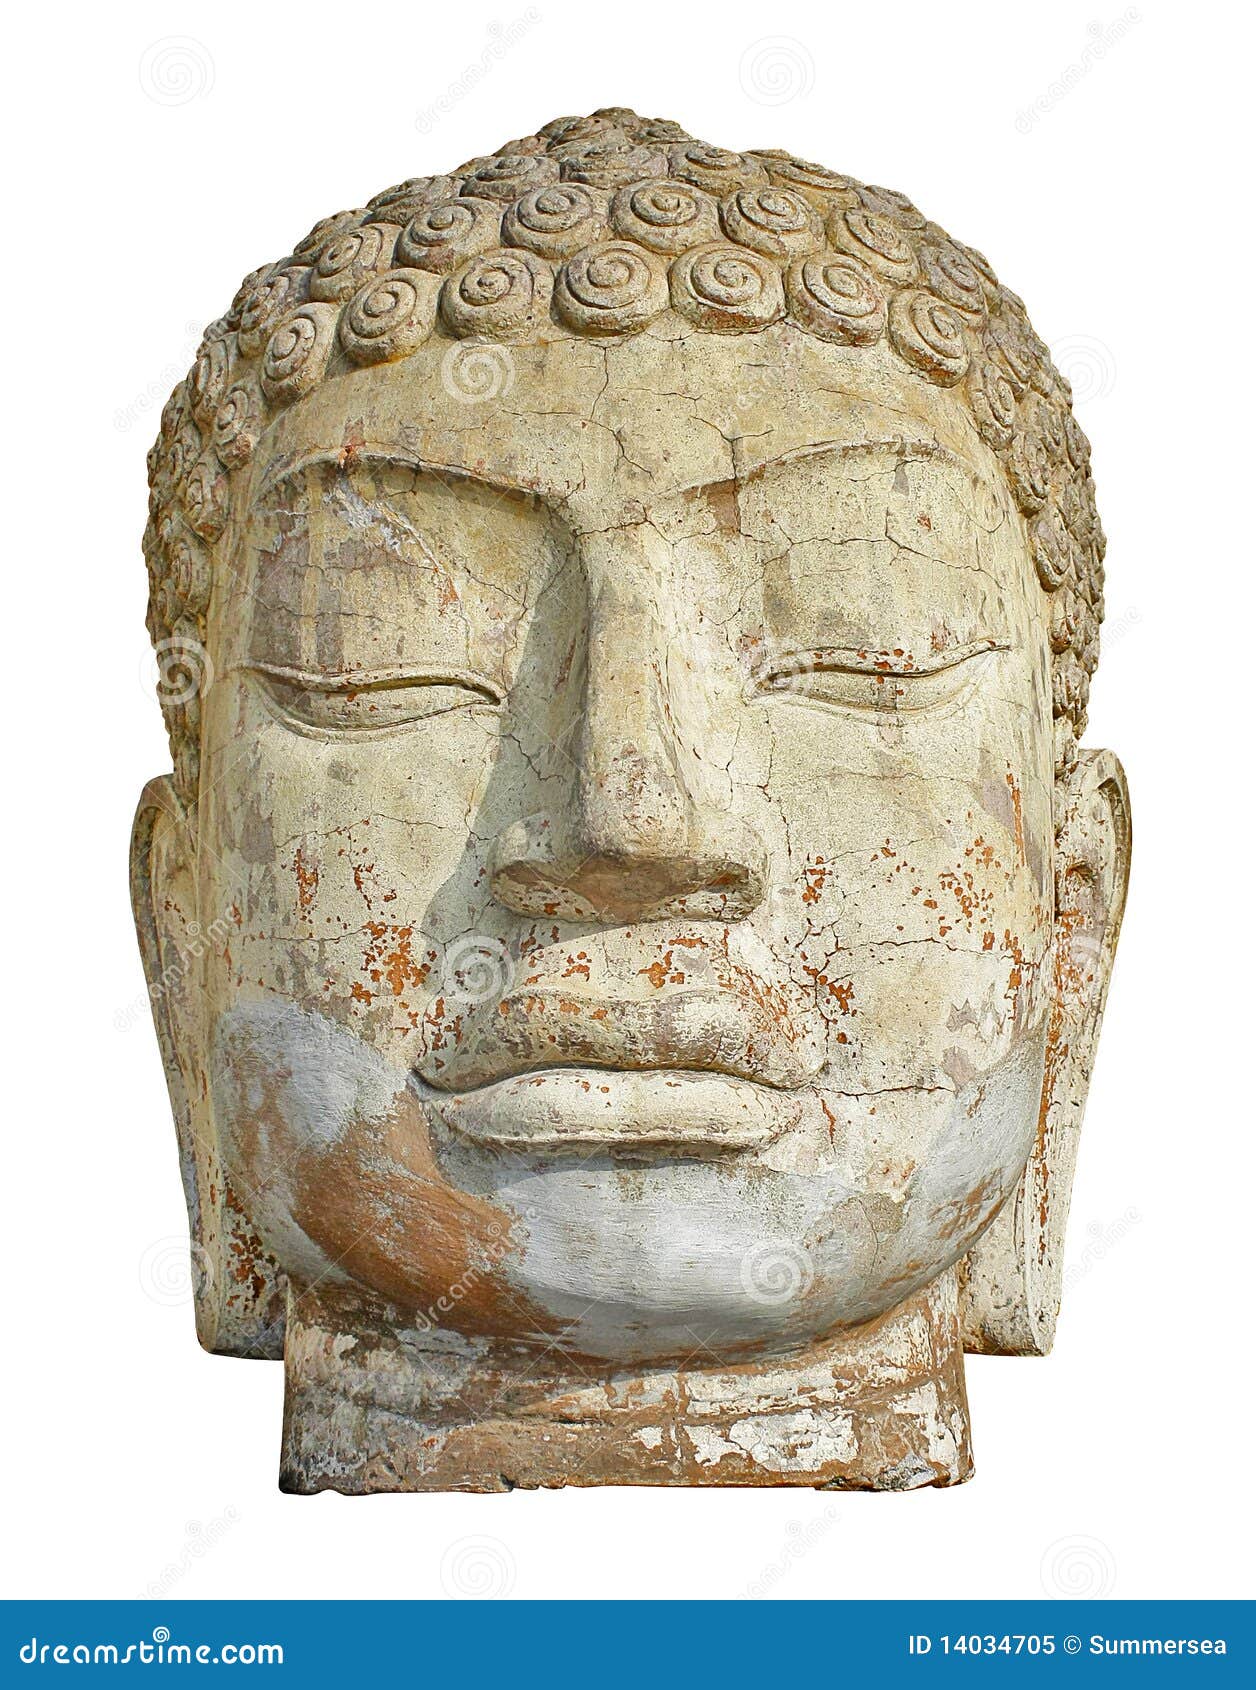 ancient stone head artifact